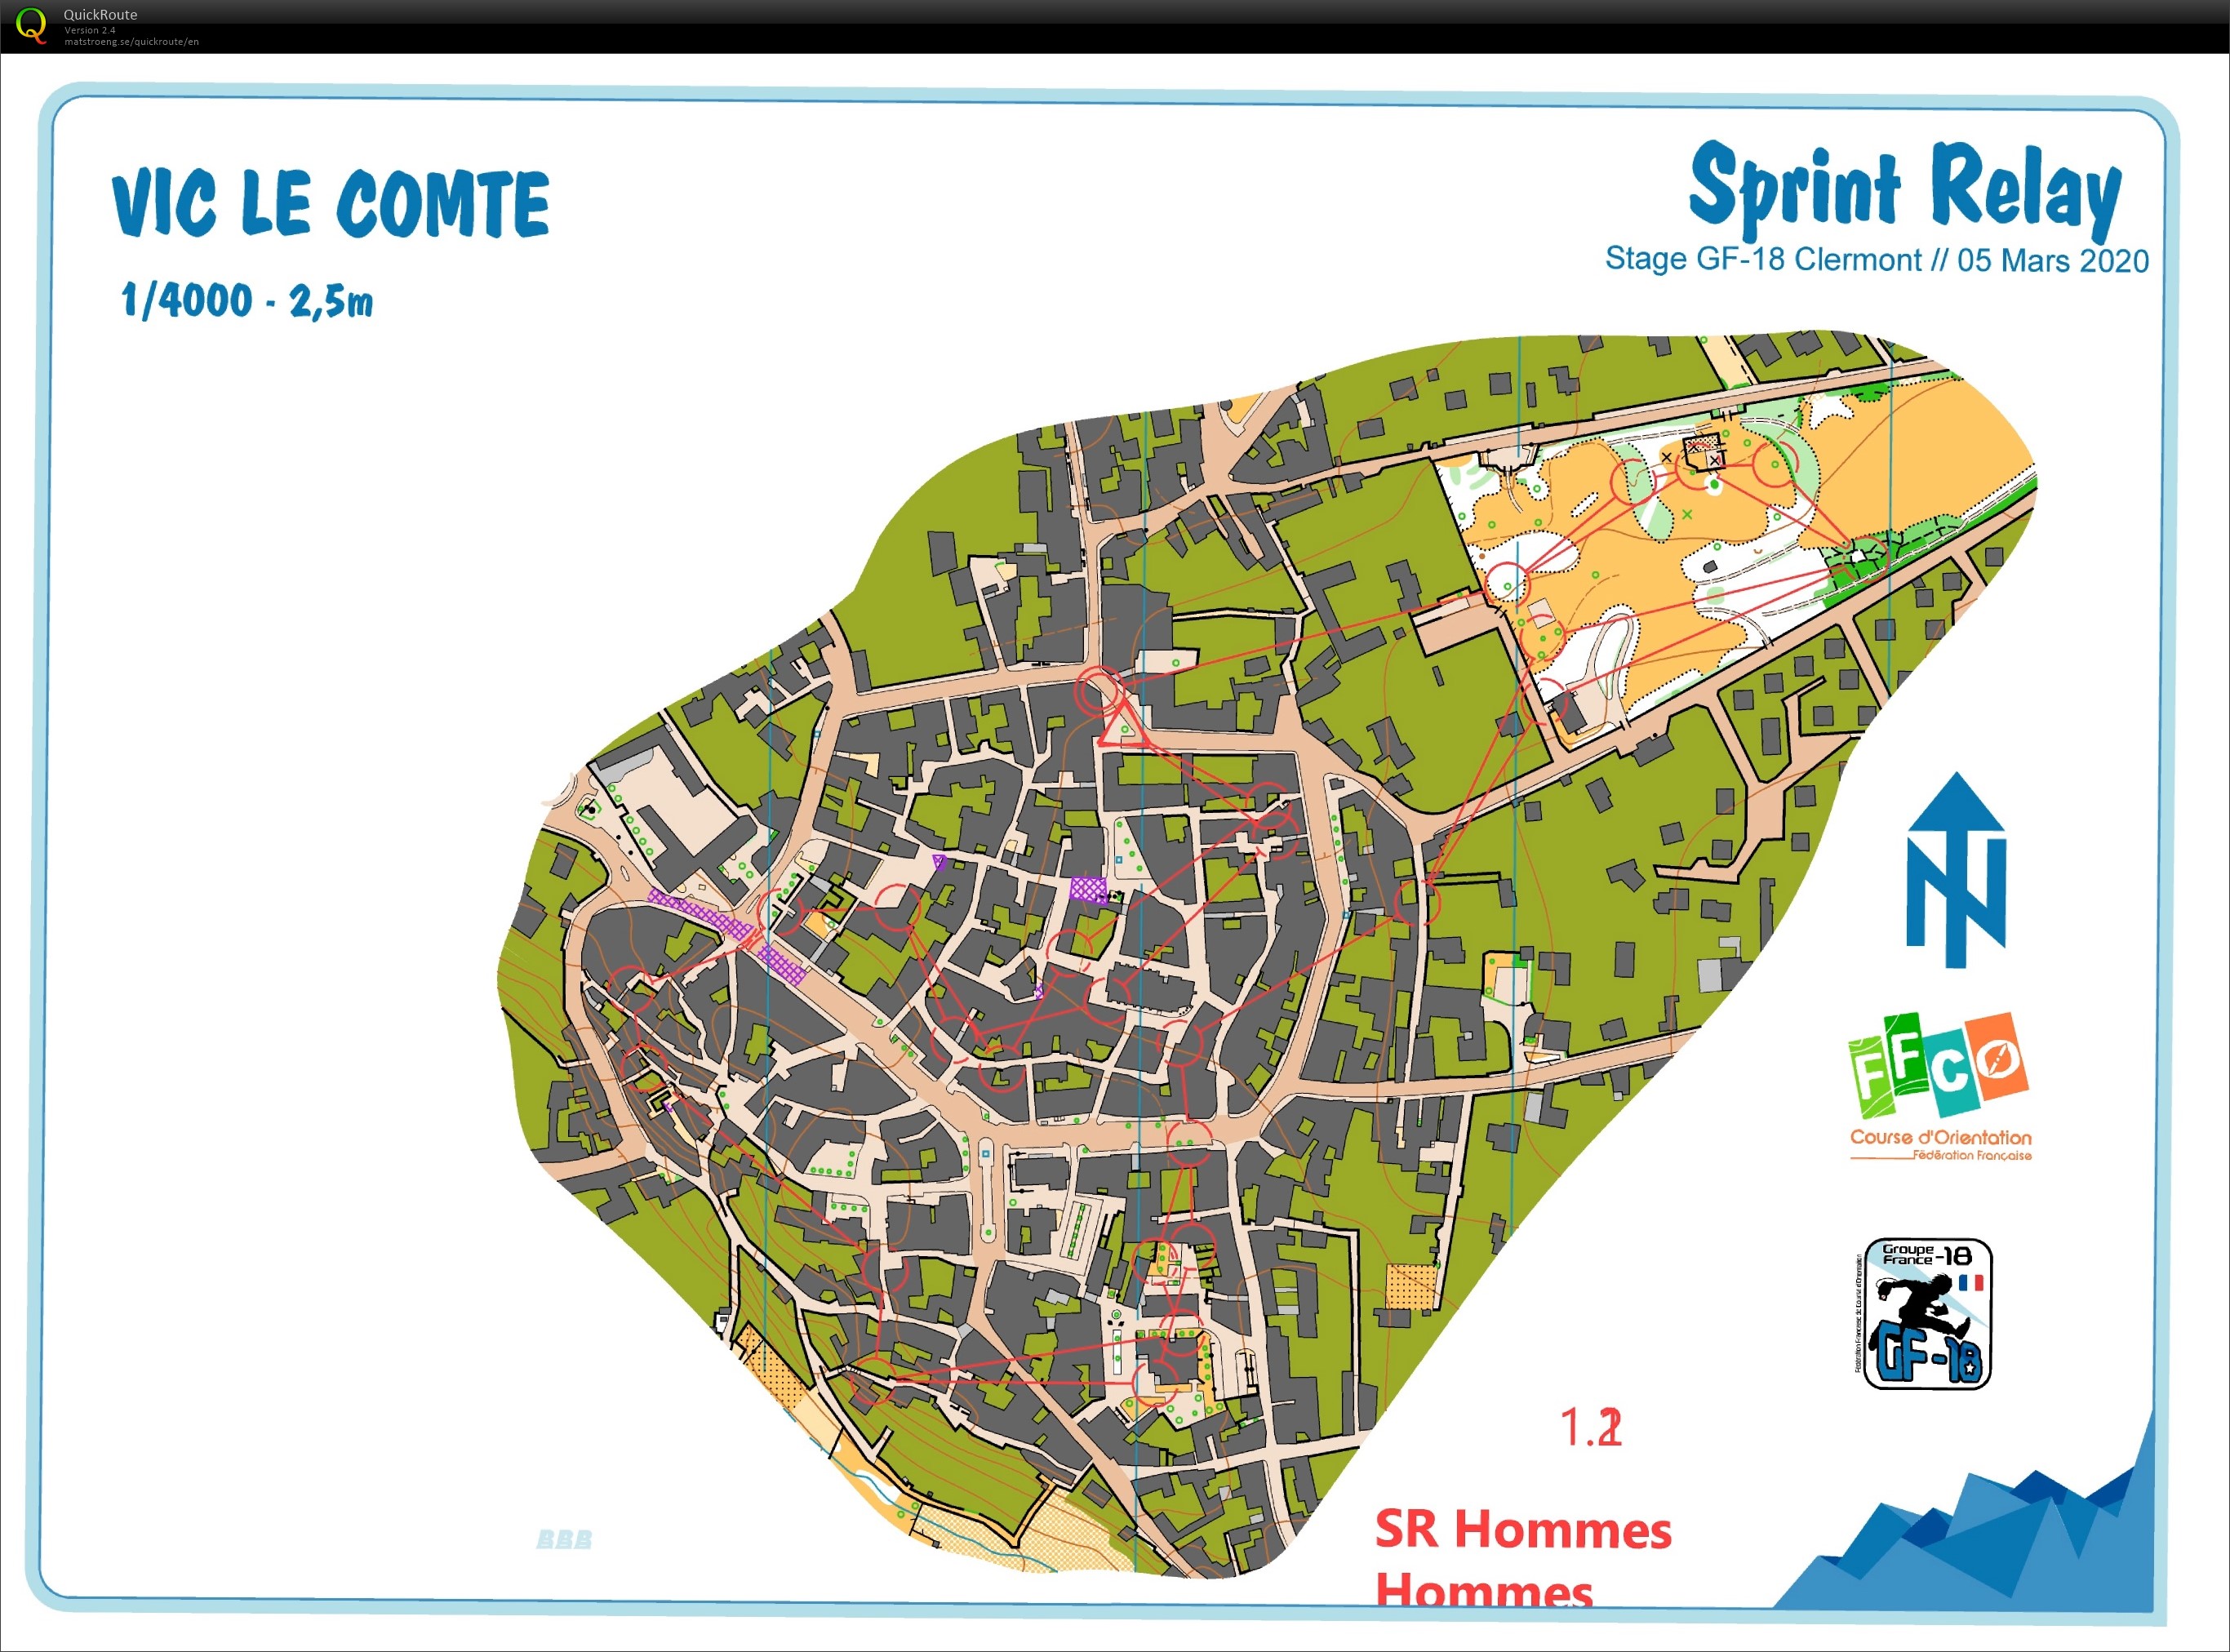 Stage gf-18 Clermont (8) Sprint Relais (05.03.2020)